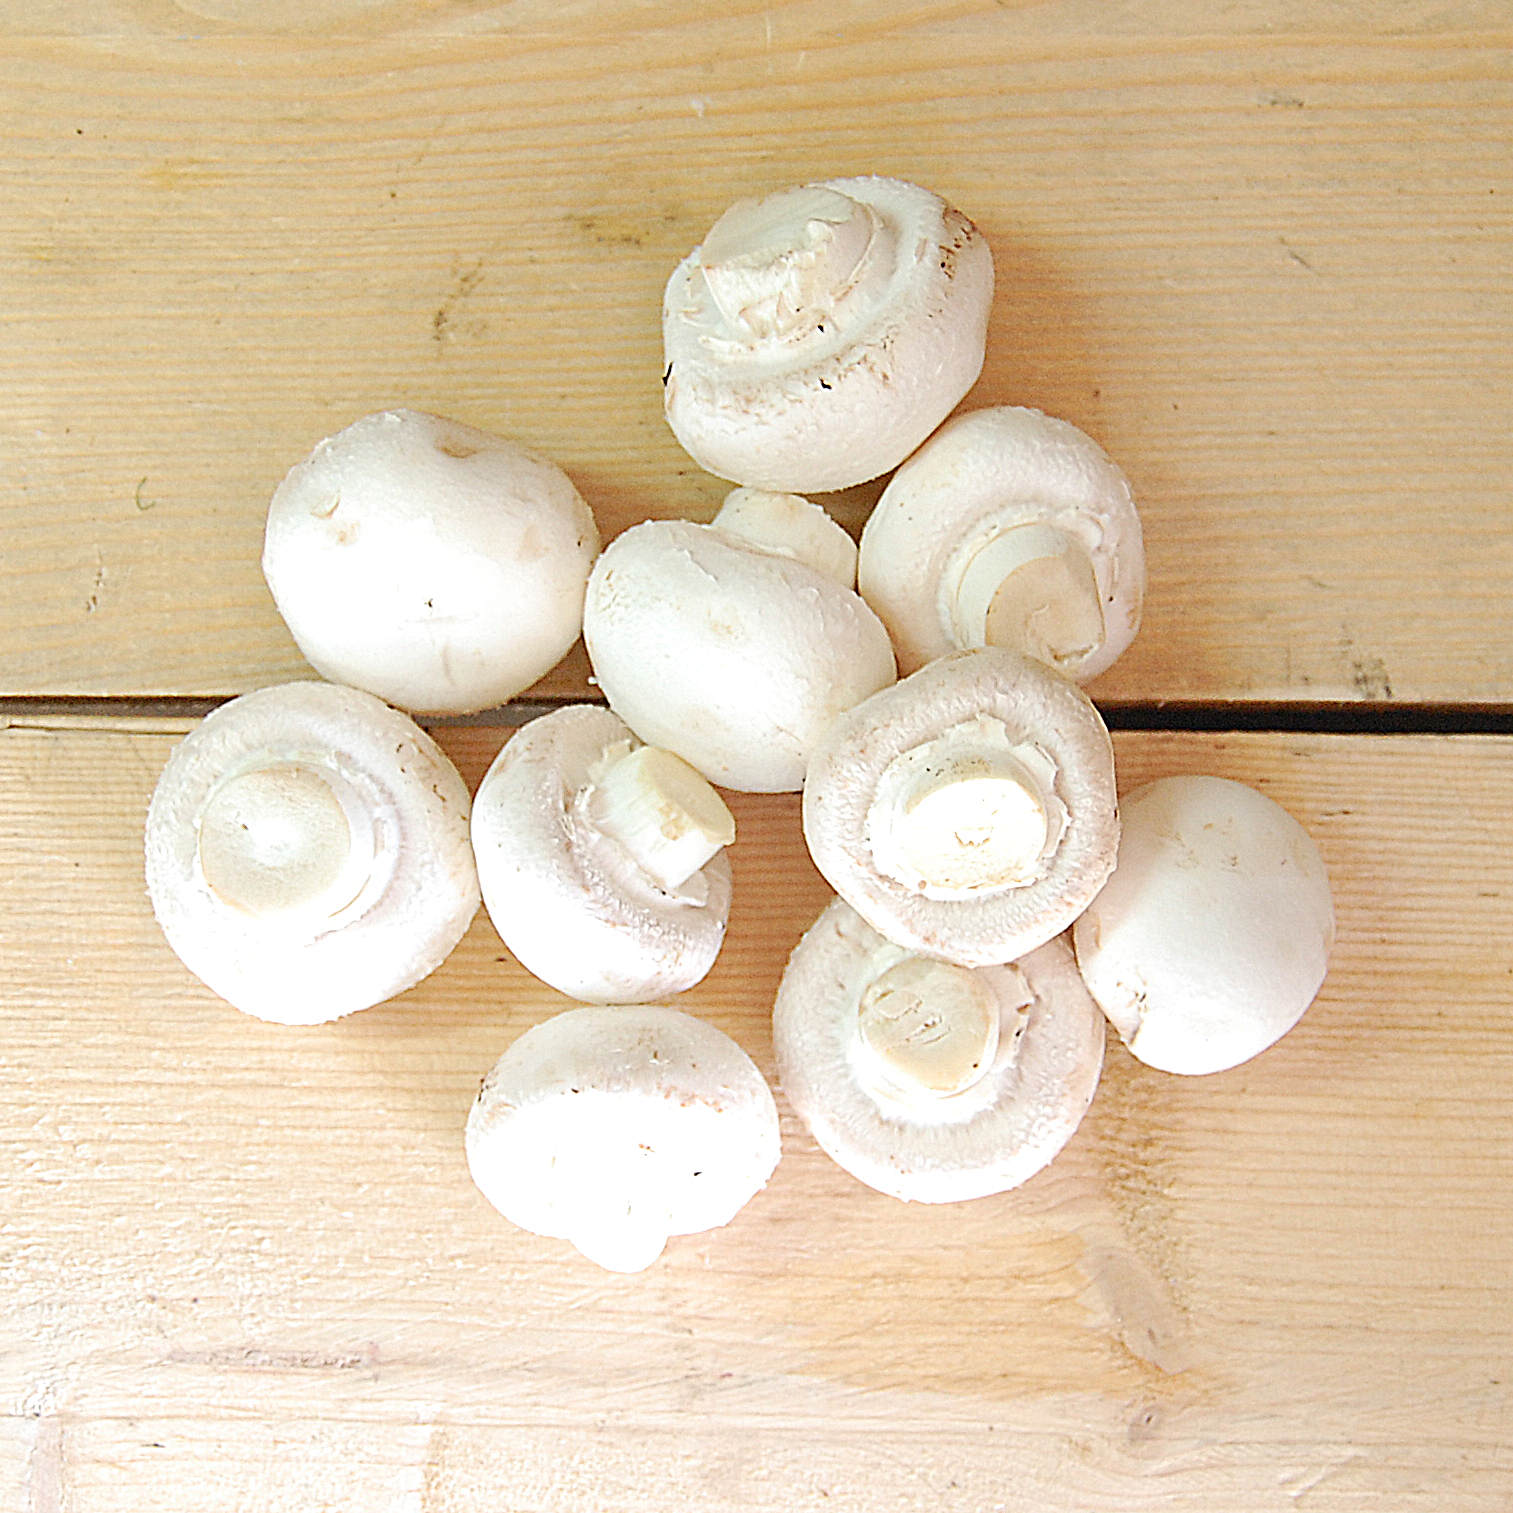 mushrooms white 250g suffolk